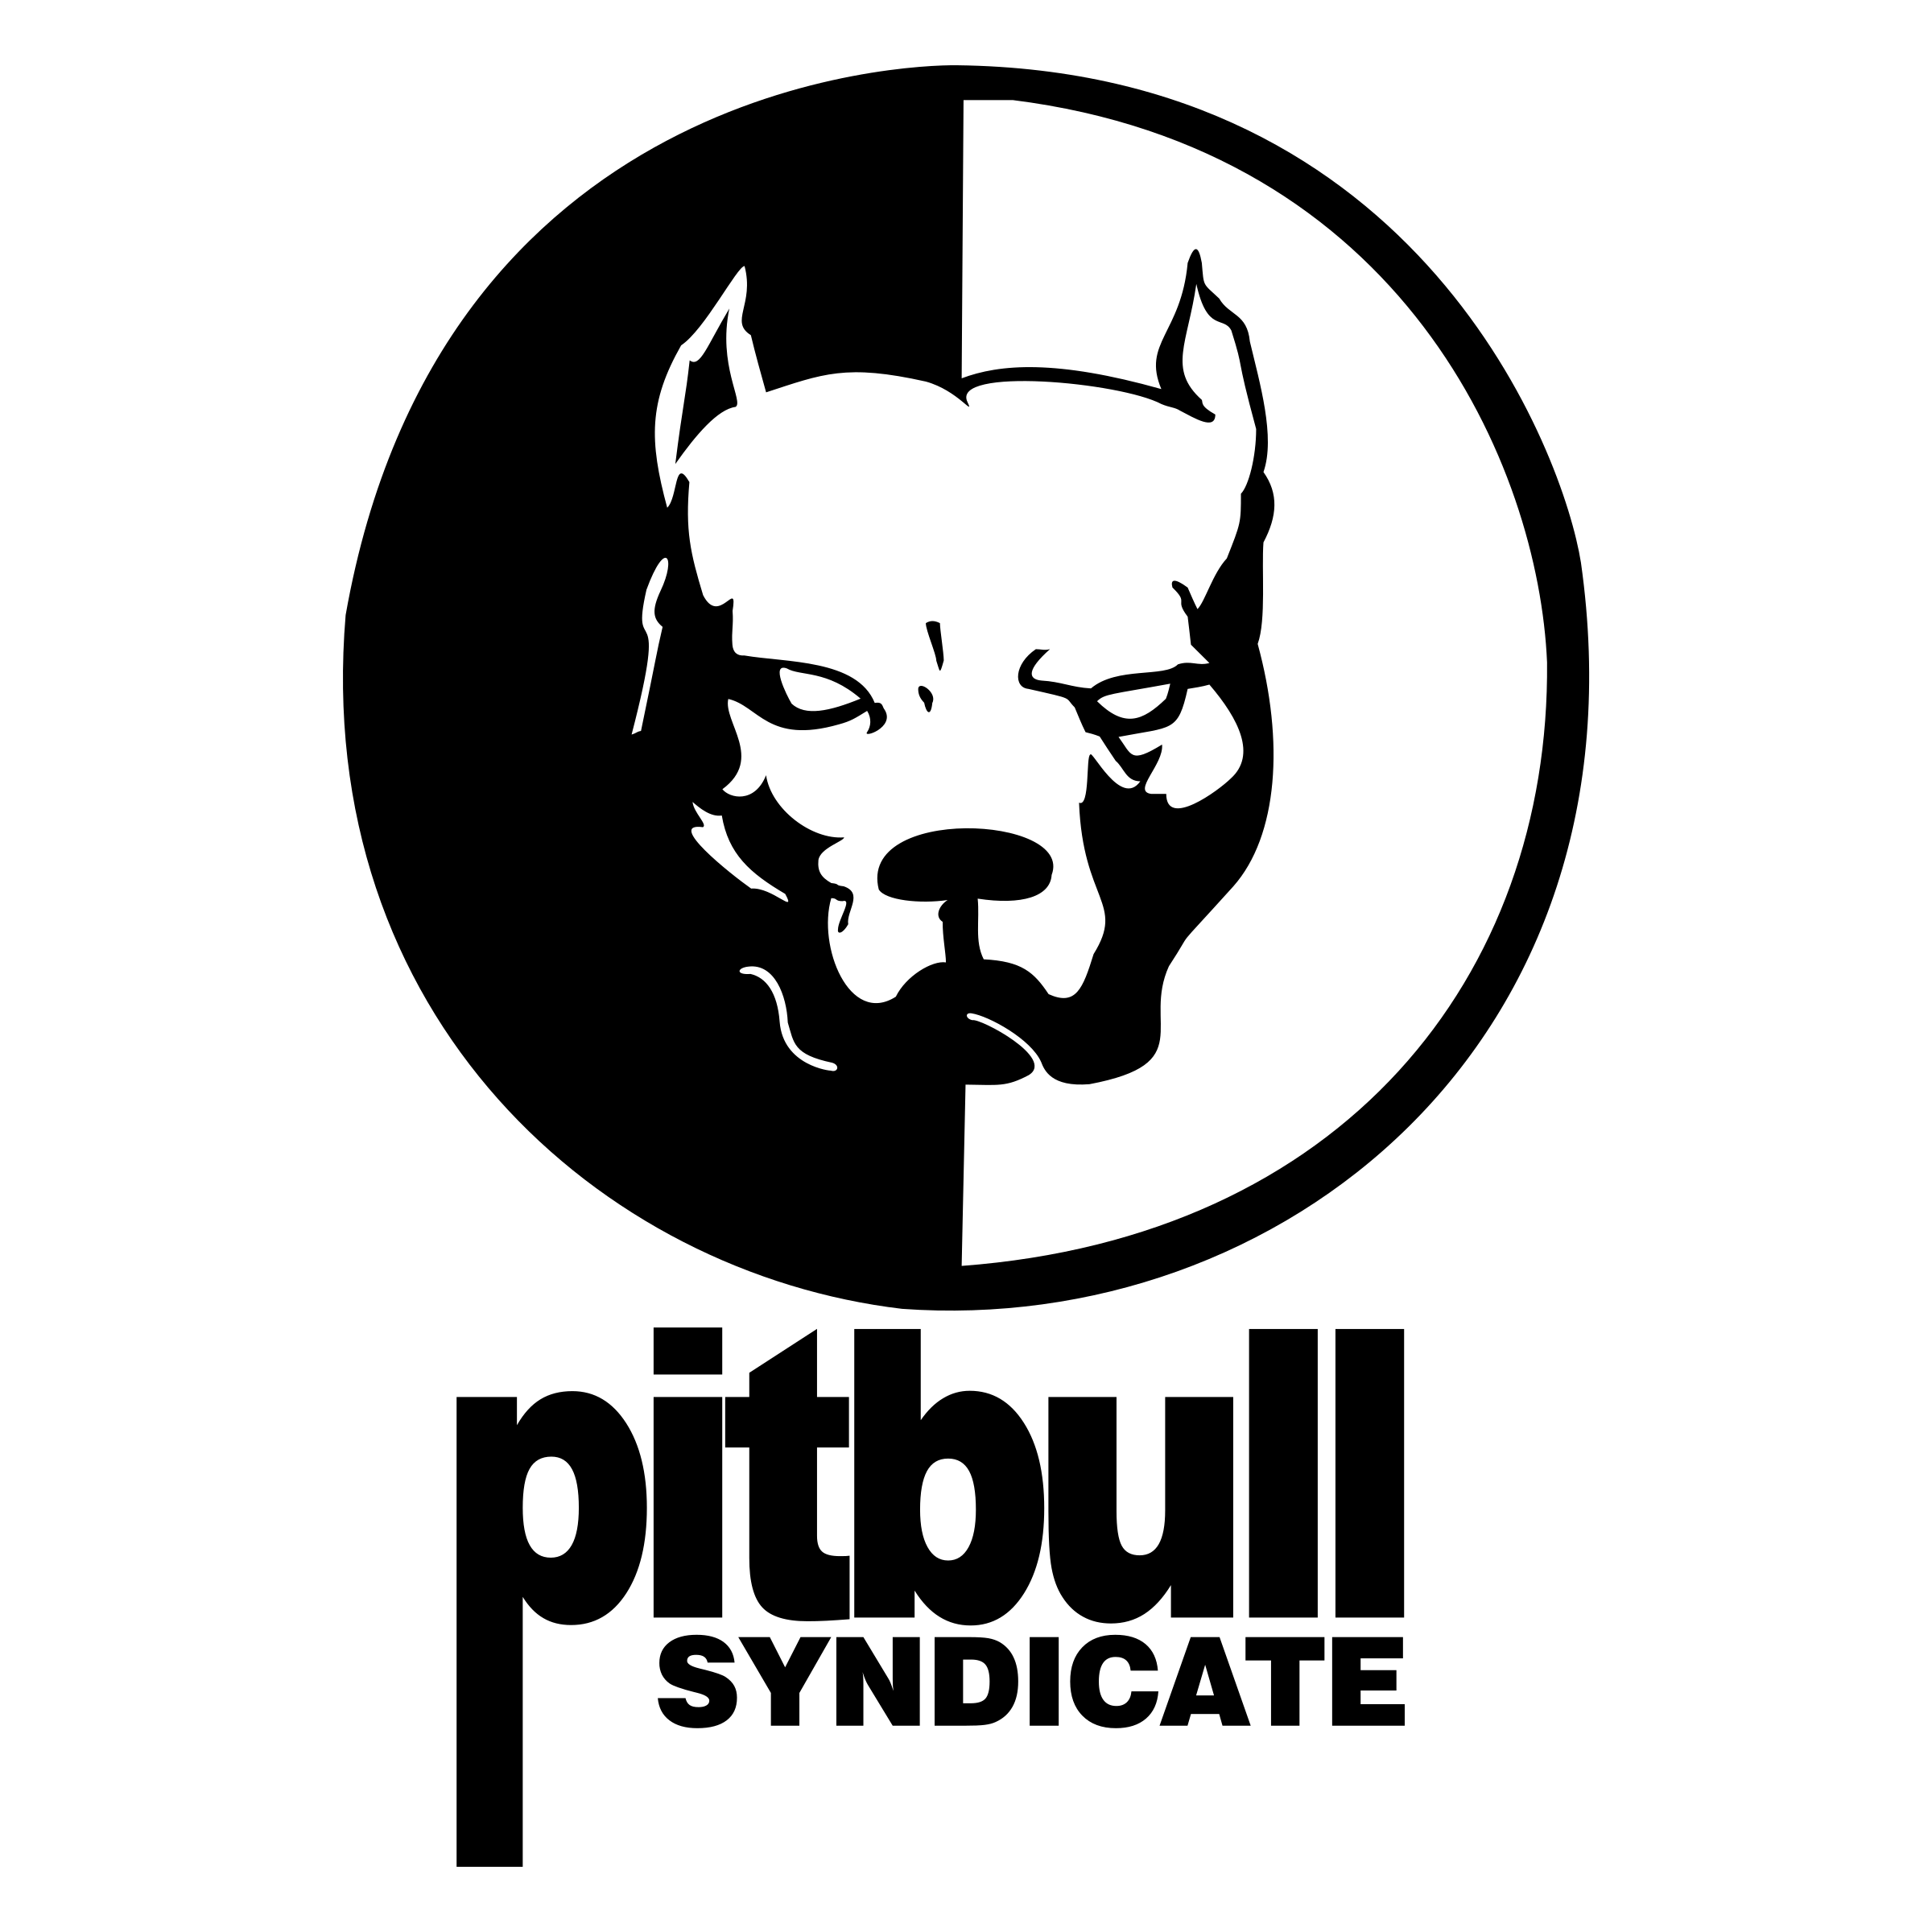 Pitbull Black and White Logo - Pitbull Syndicate Logo PNG Transparent & SVG Vector - Freebie Supply